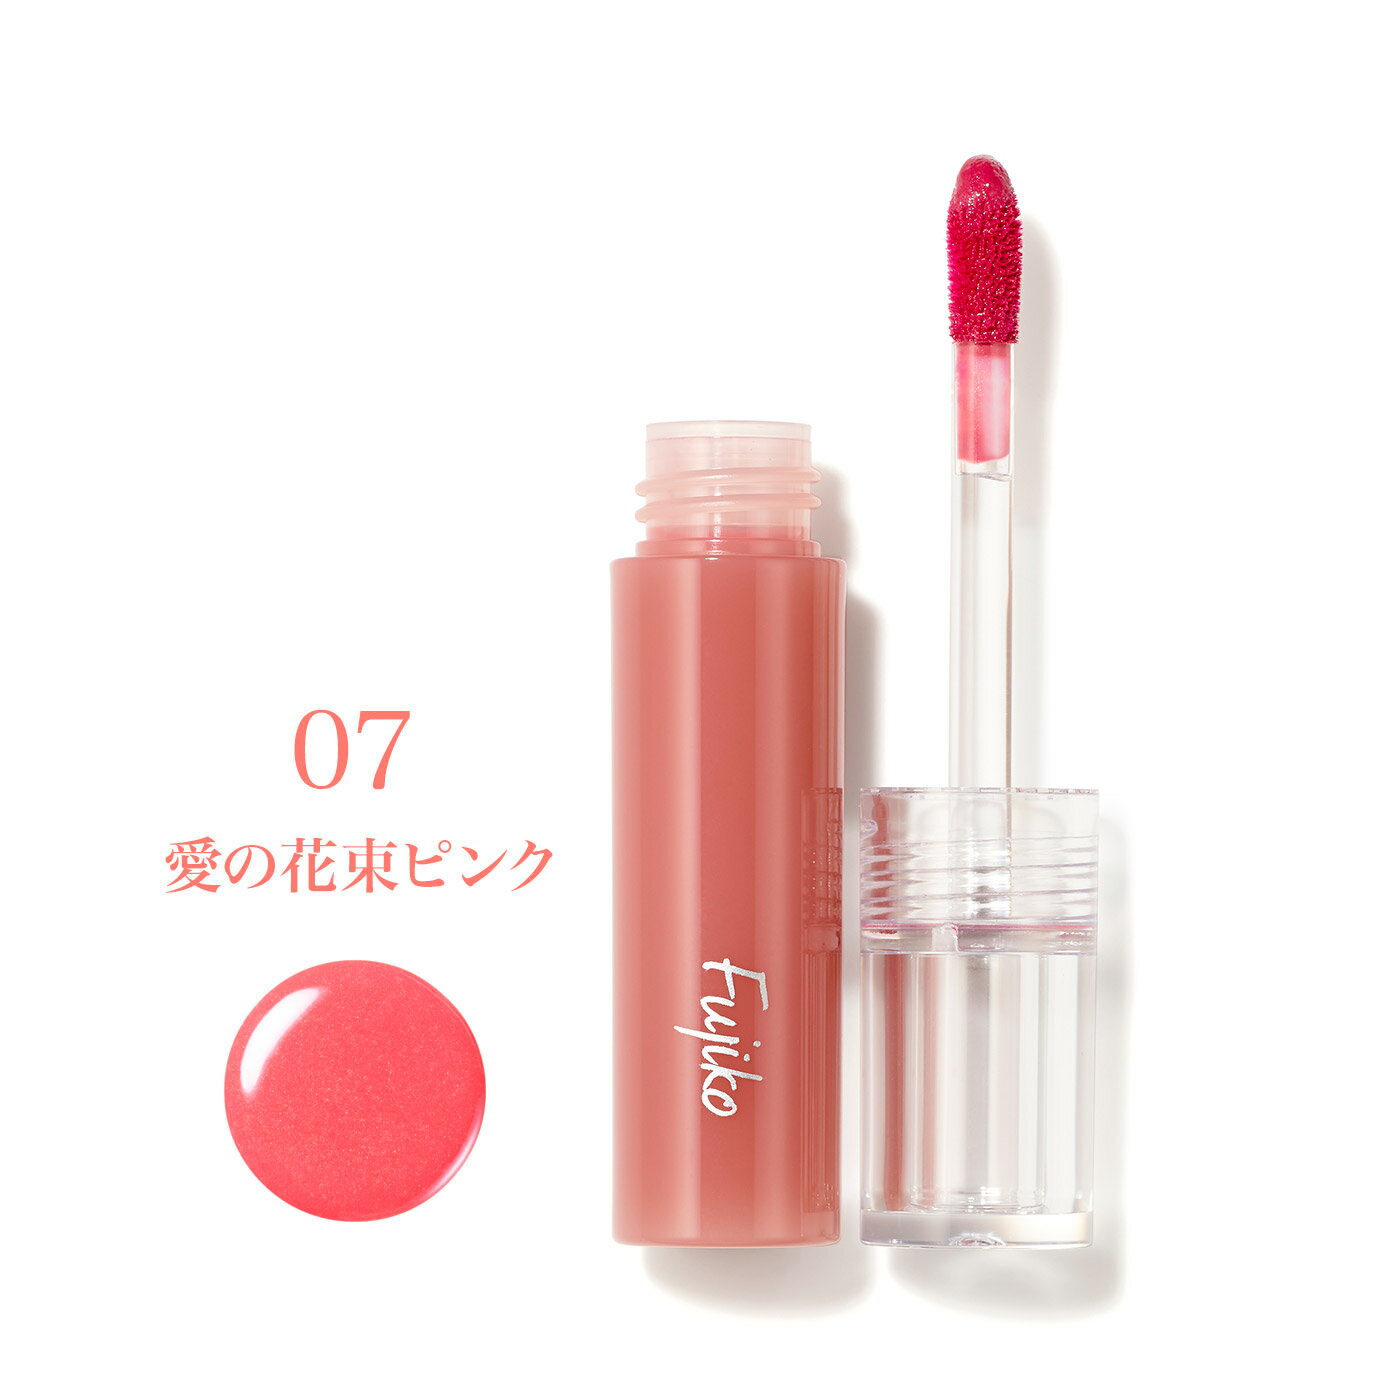 Fujiko フジコ ニュアンスラップティント 07 愛の花束ピンク 2.8g